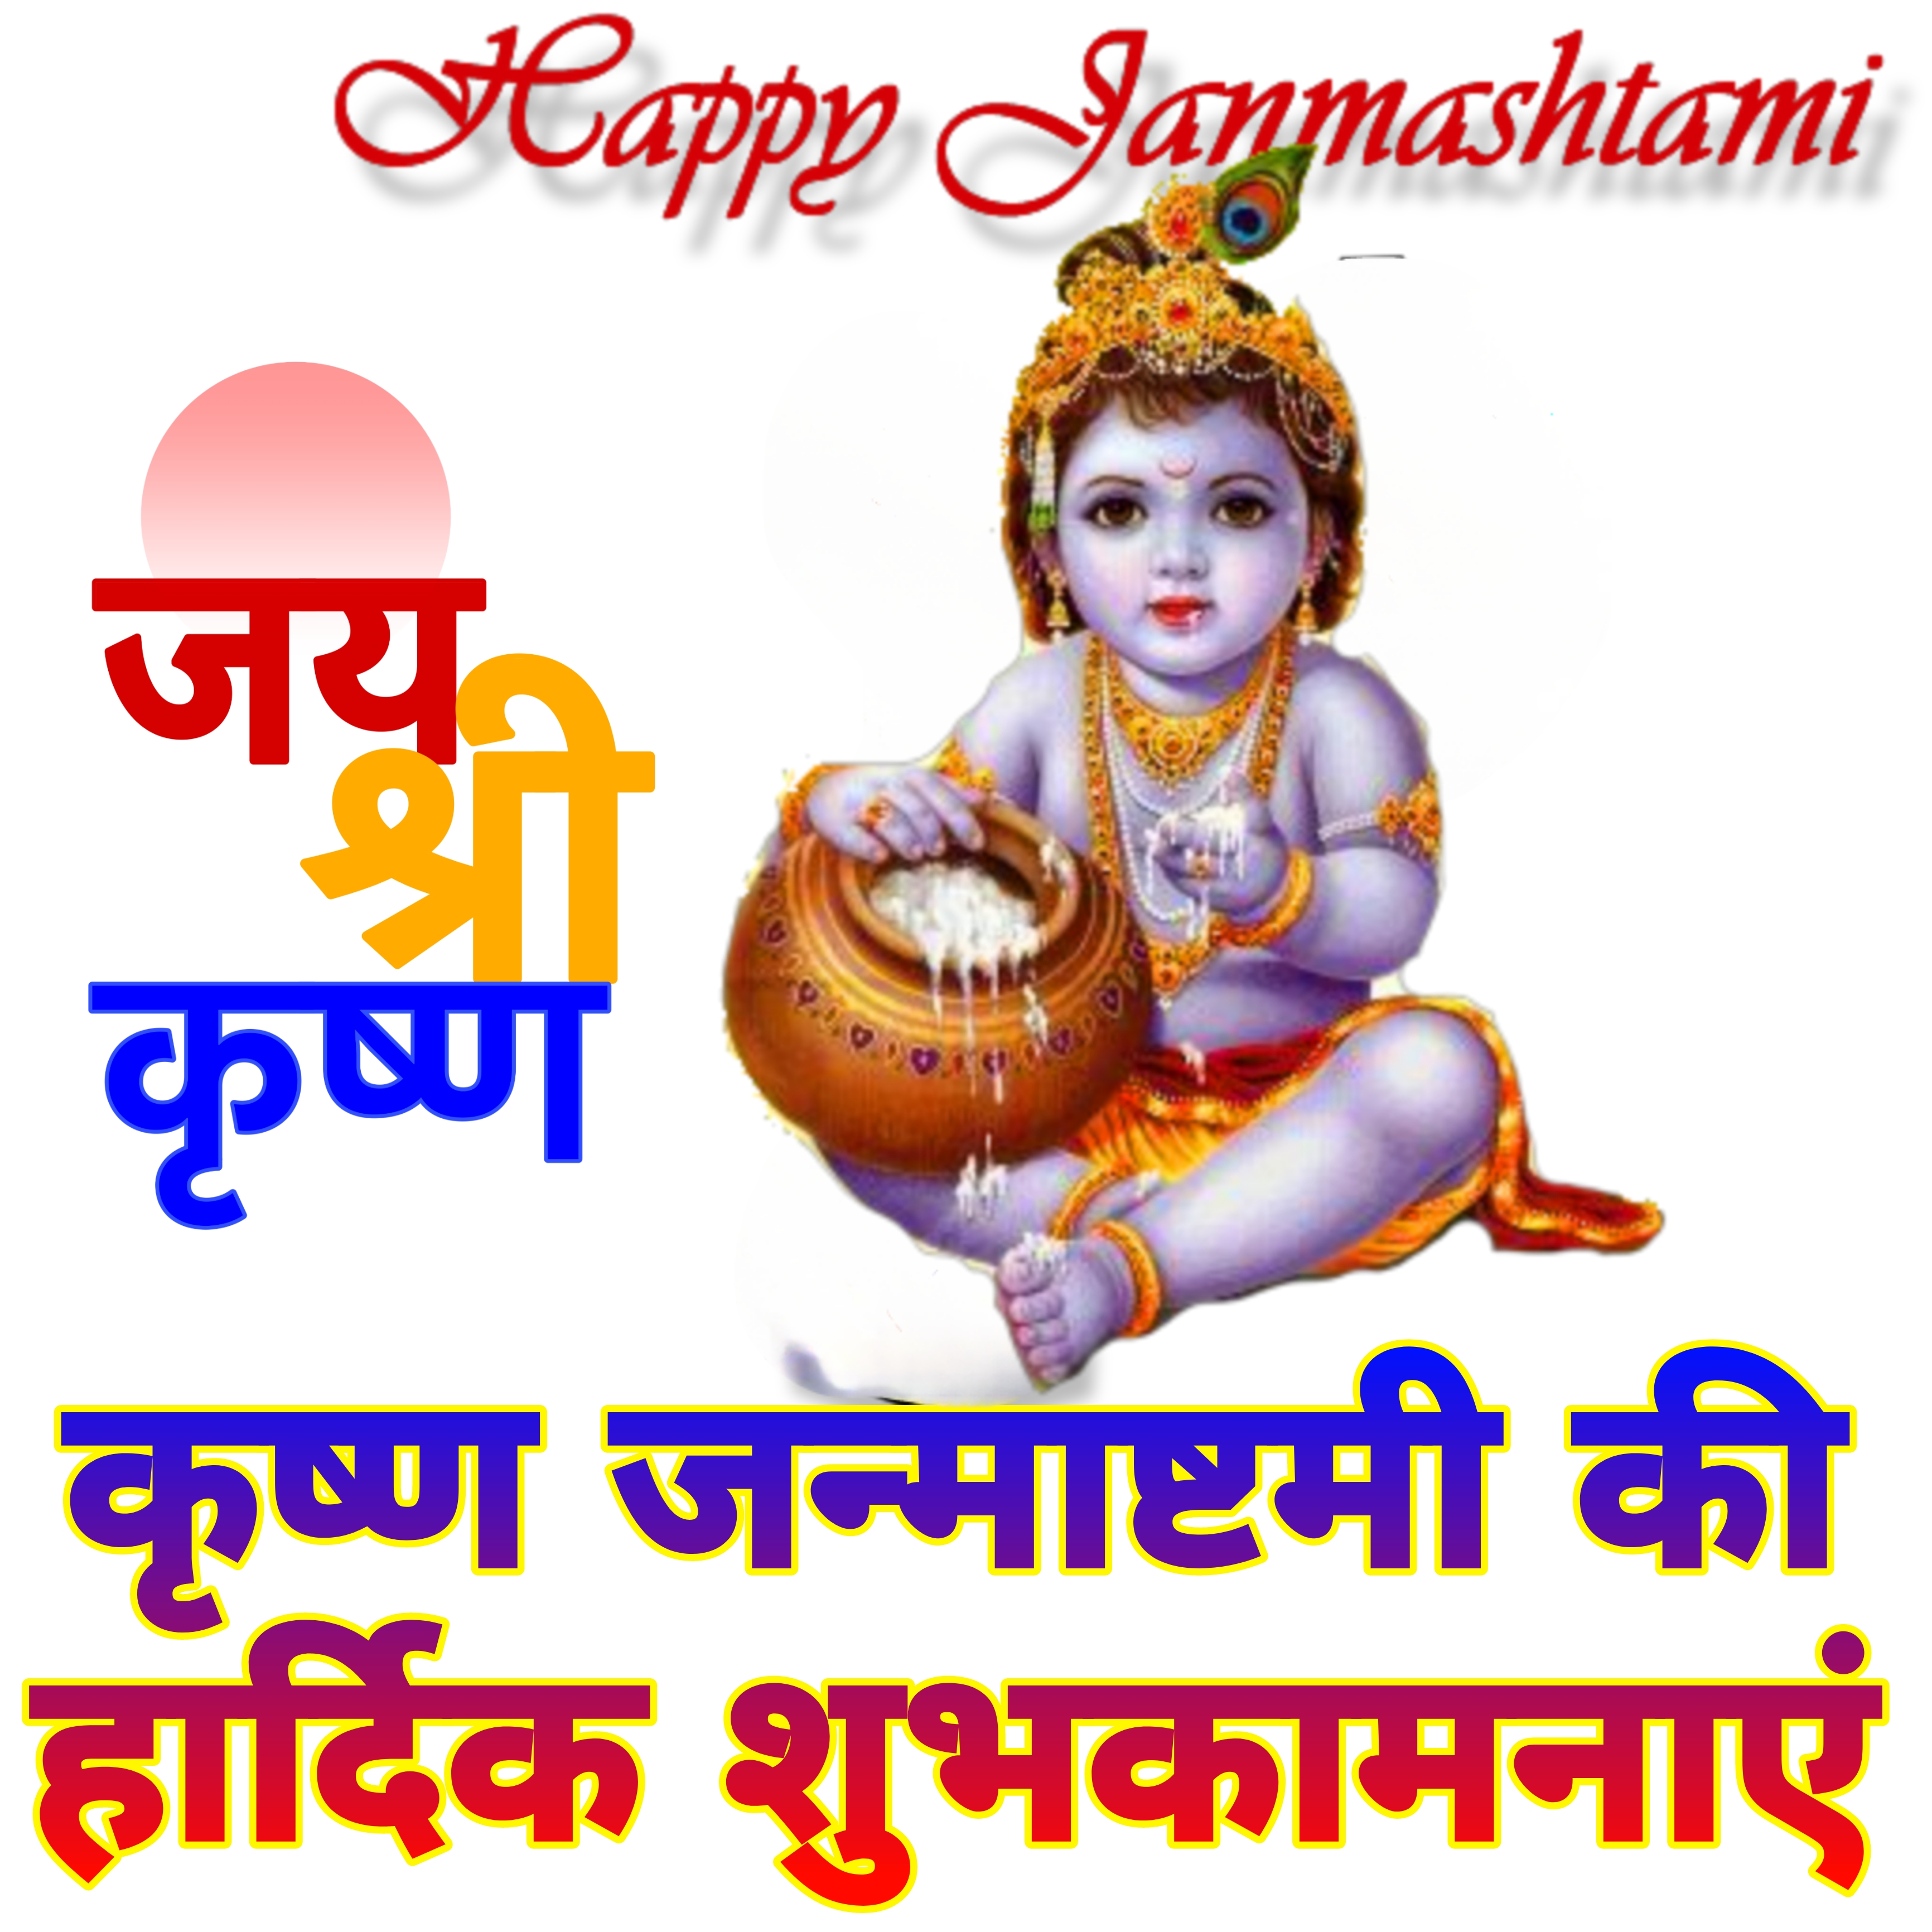 कृष्ण जन्माष्टमी की हार्दिक शुभकामनाएं | Krishna janmashtami ki hardik shubhkamnaye image | Lord sri Krishna janmashtami images